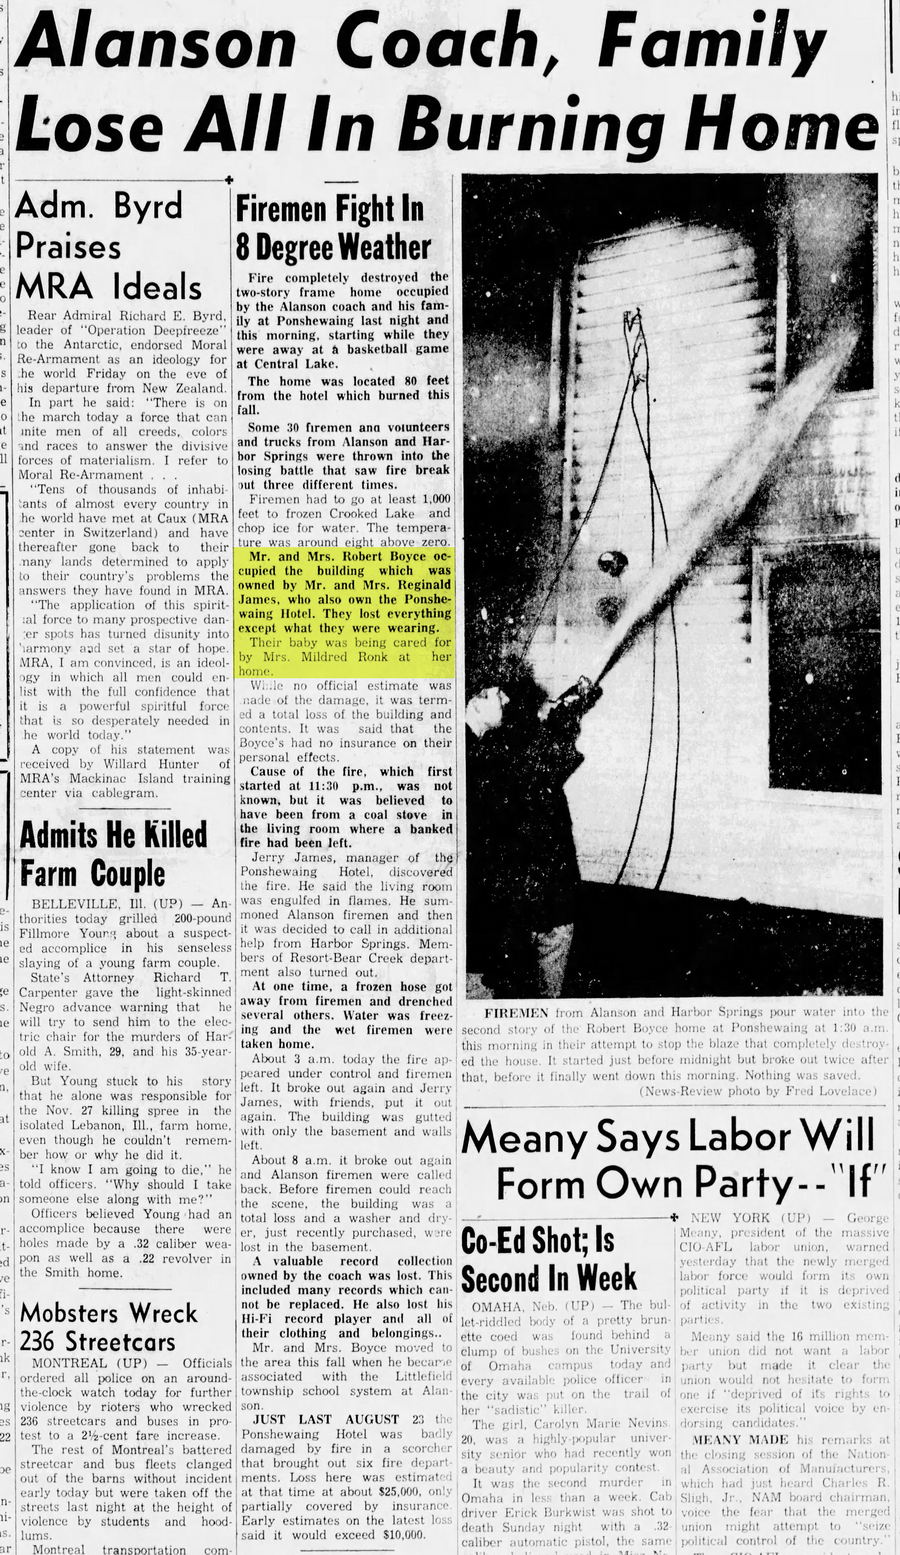 Ponshewaing Hotel - Dec 10 1955 Article (newer photo)